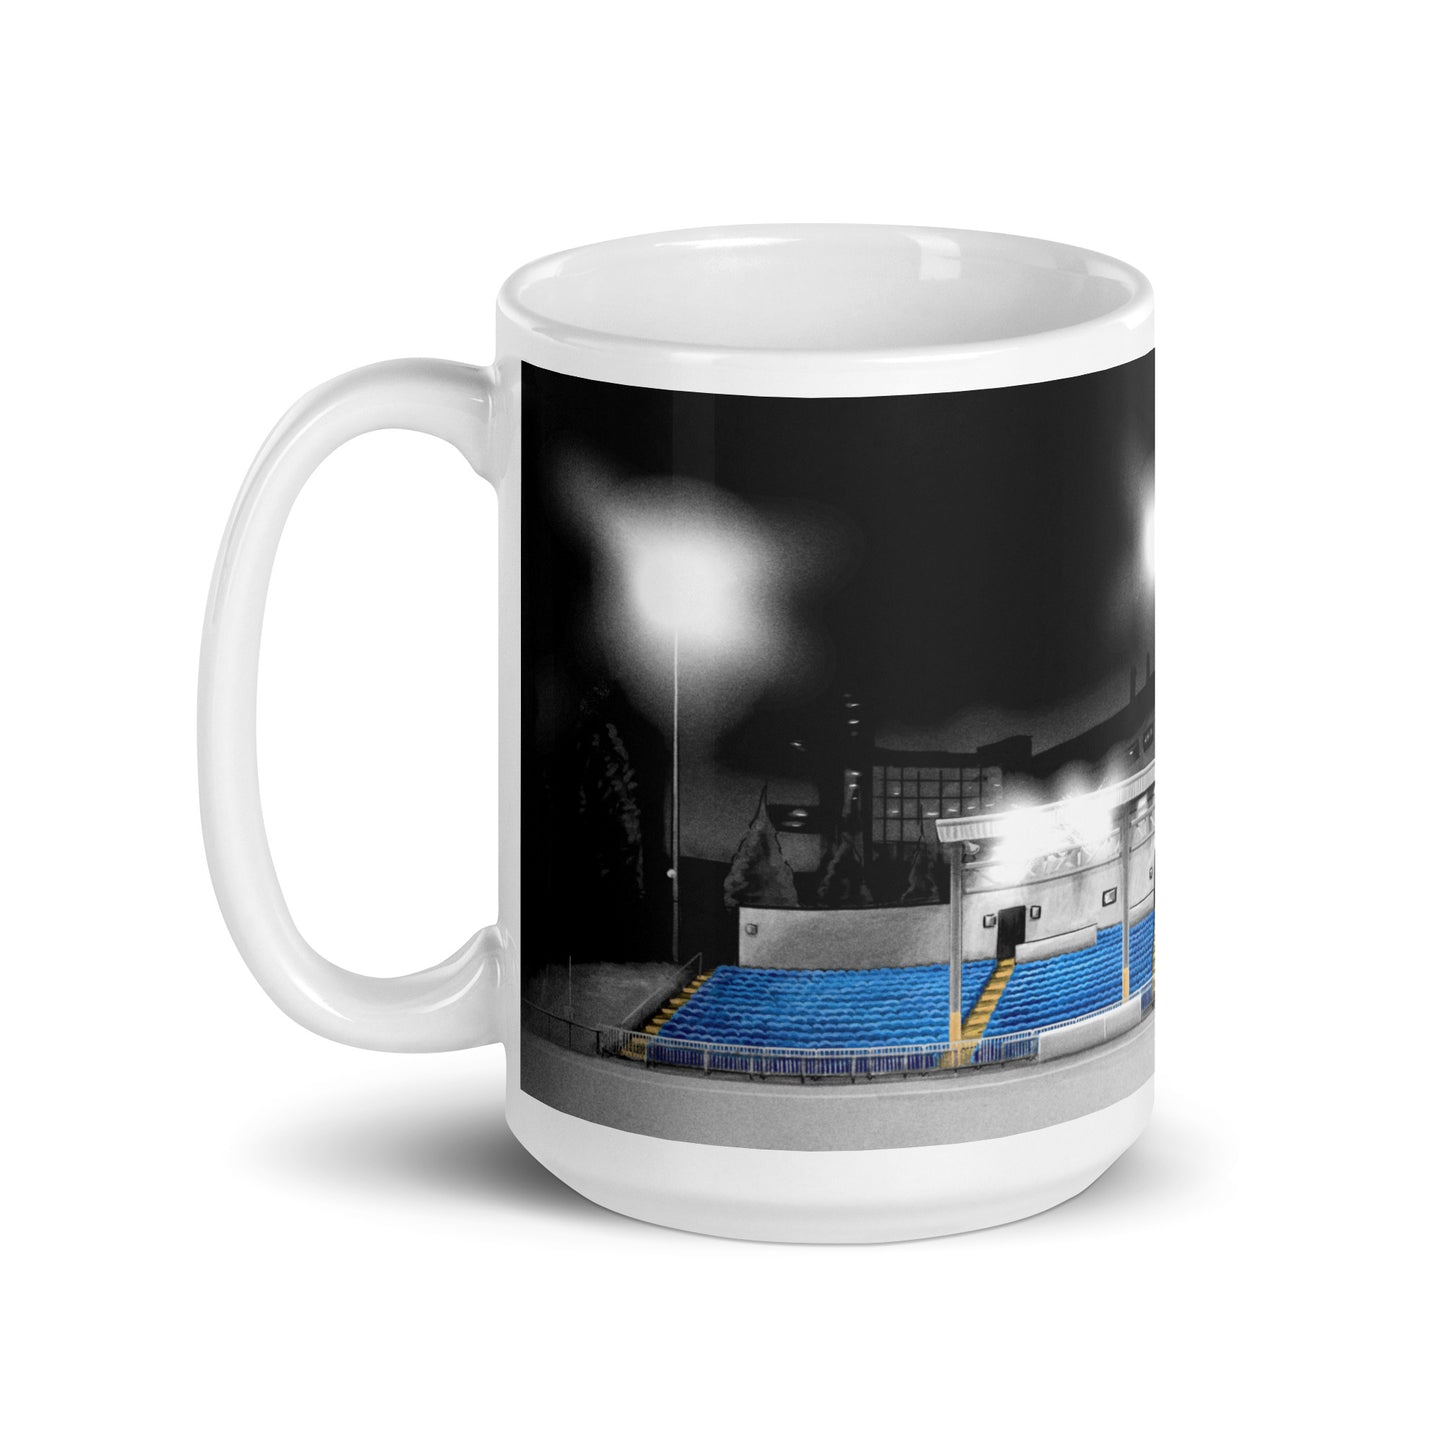 The UCD Bowl - UCD AFC glossy mug